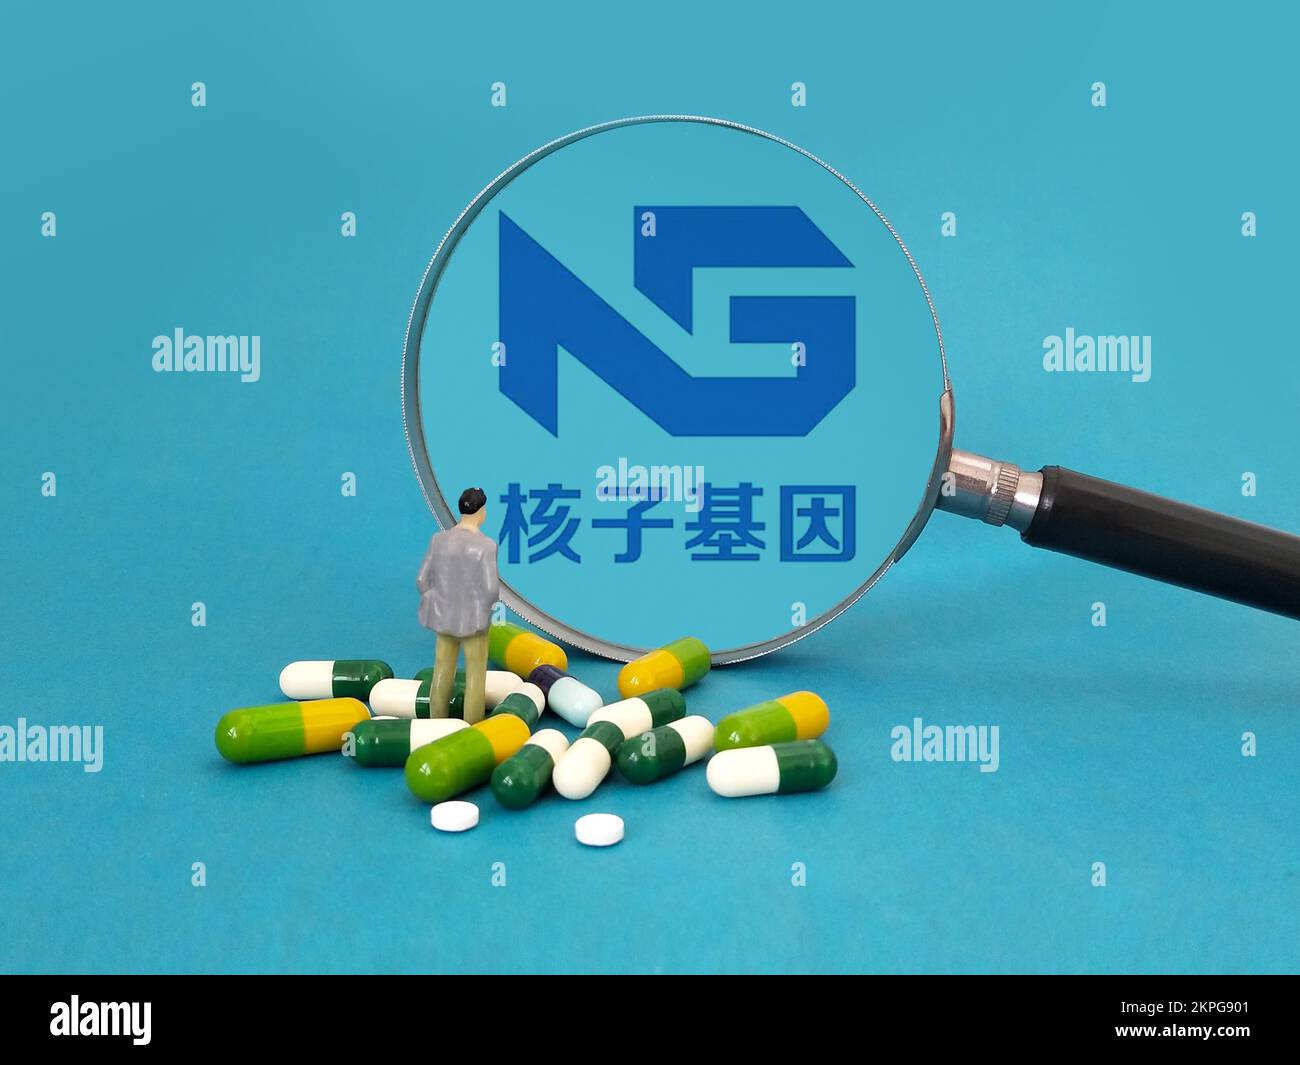 SUQIAN, CHINA - NOVEMBER 28, 2022 - Illustration: A view of the Shenzhen Hezi Genetics Company, Suqian, Jiangsu Province, China, Nov 28, 2022. On Nove Stock Photo